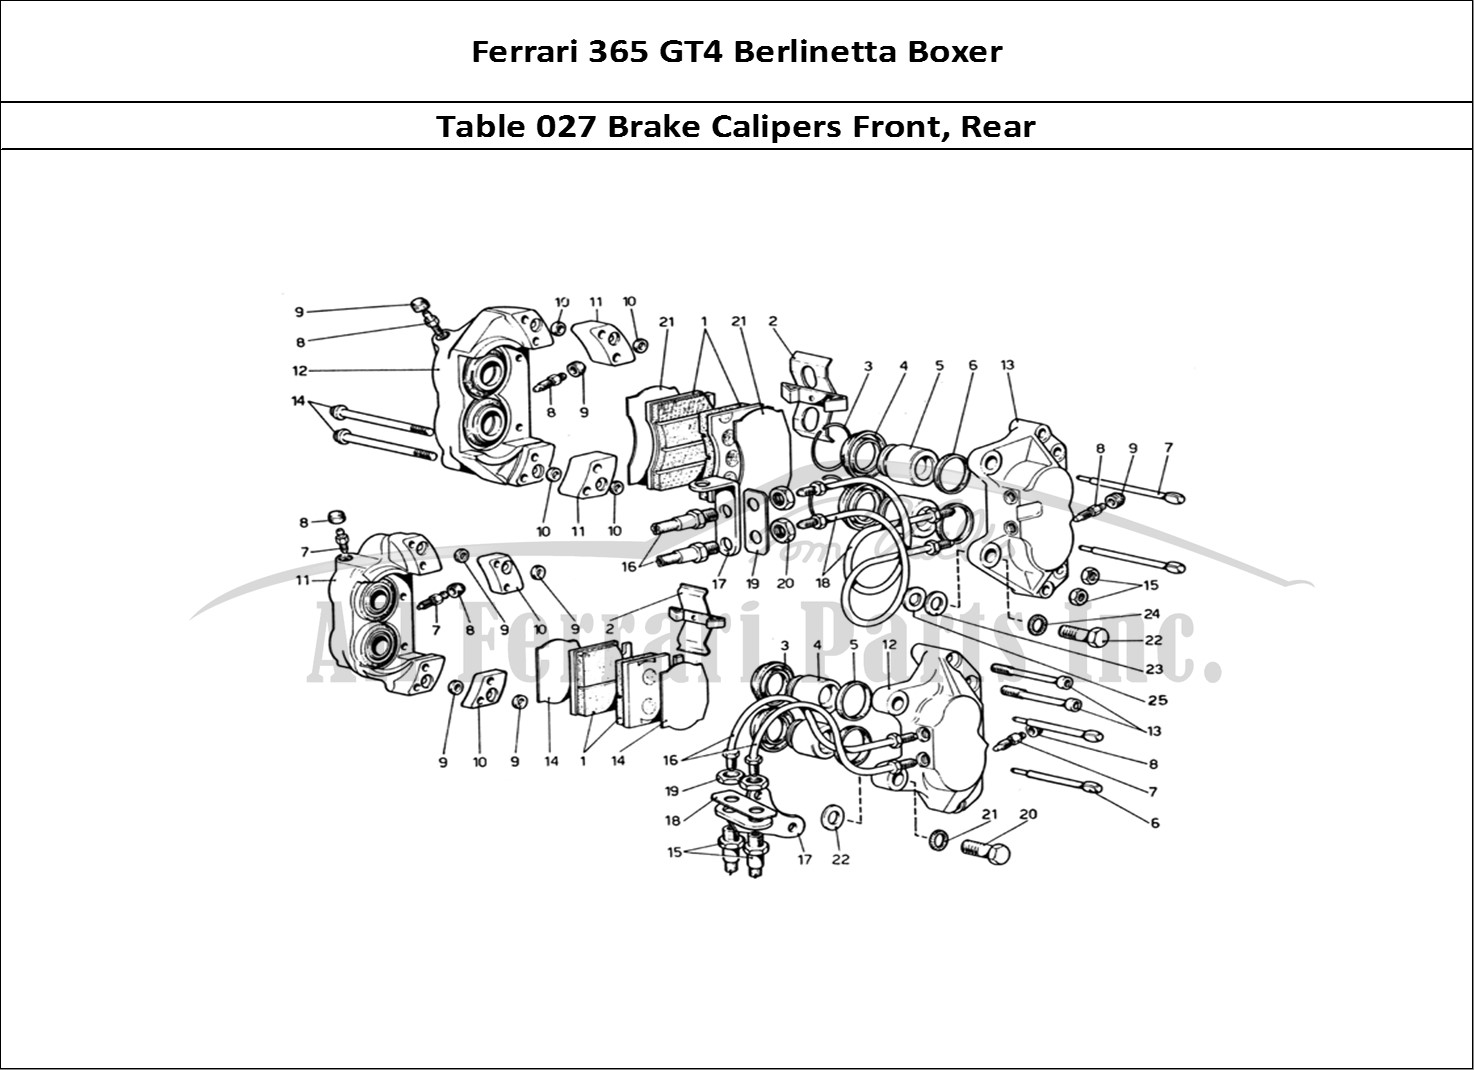 Ferrari Parts Ferrari 365 GT4 Berlinetta Boxer Page 027 Calipers for Front and Re